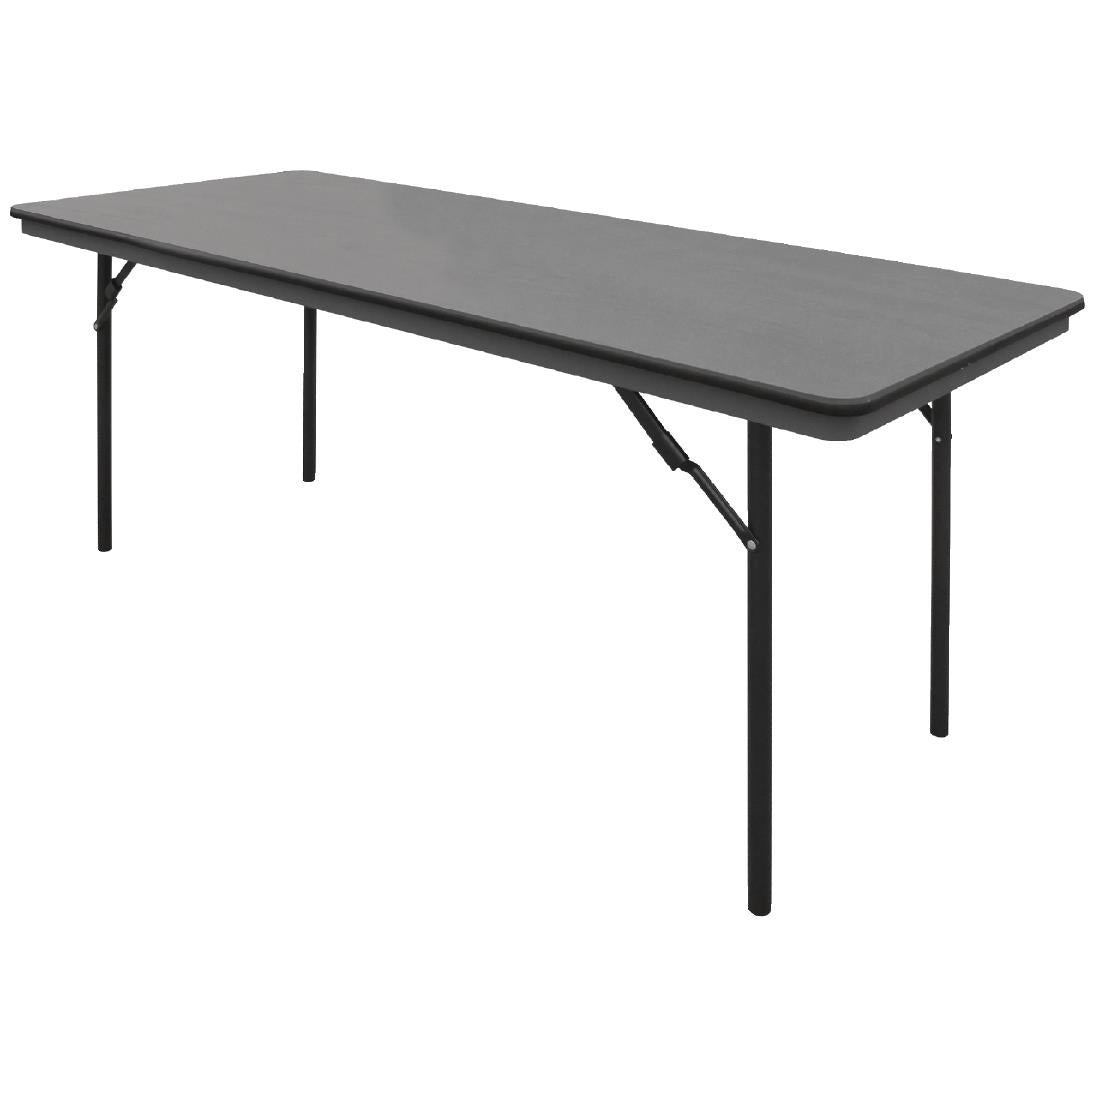 GC596 Bolero ABS Rectangular Folding Table Grey 6ft (Single) JD Catering Equipment Solutions Ltd